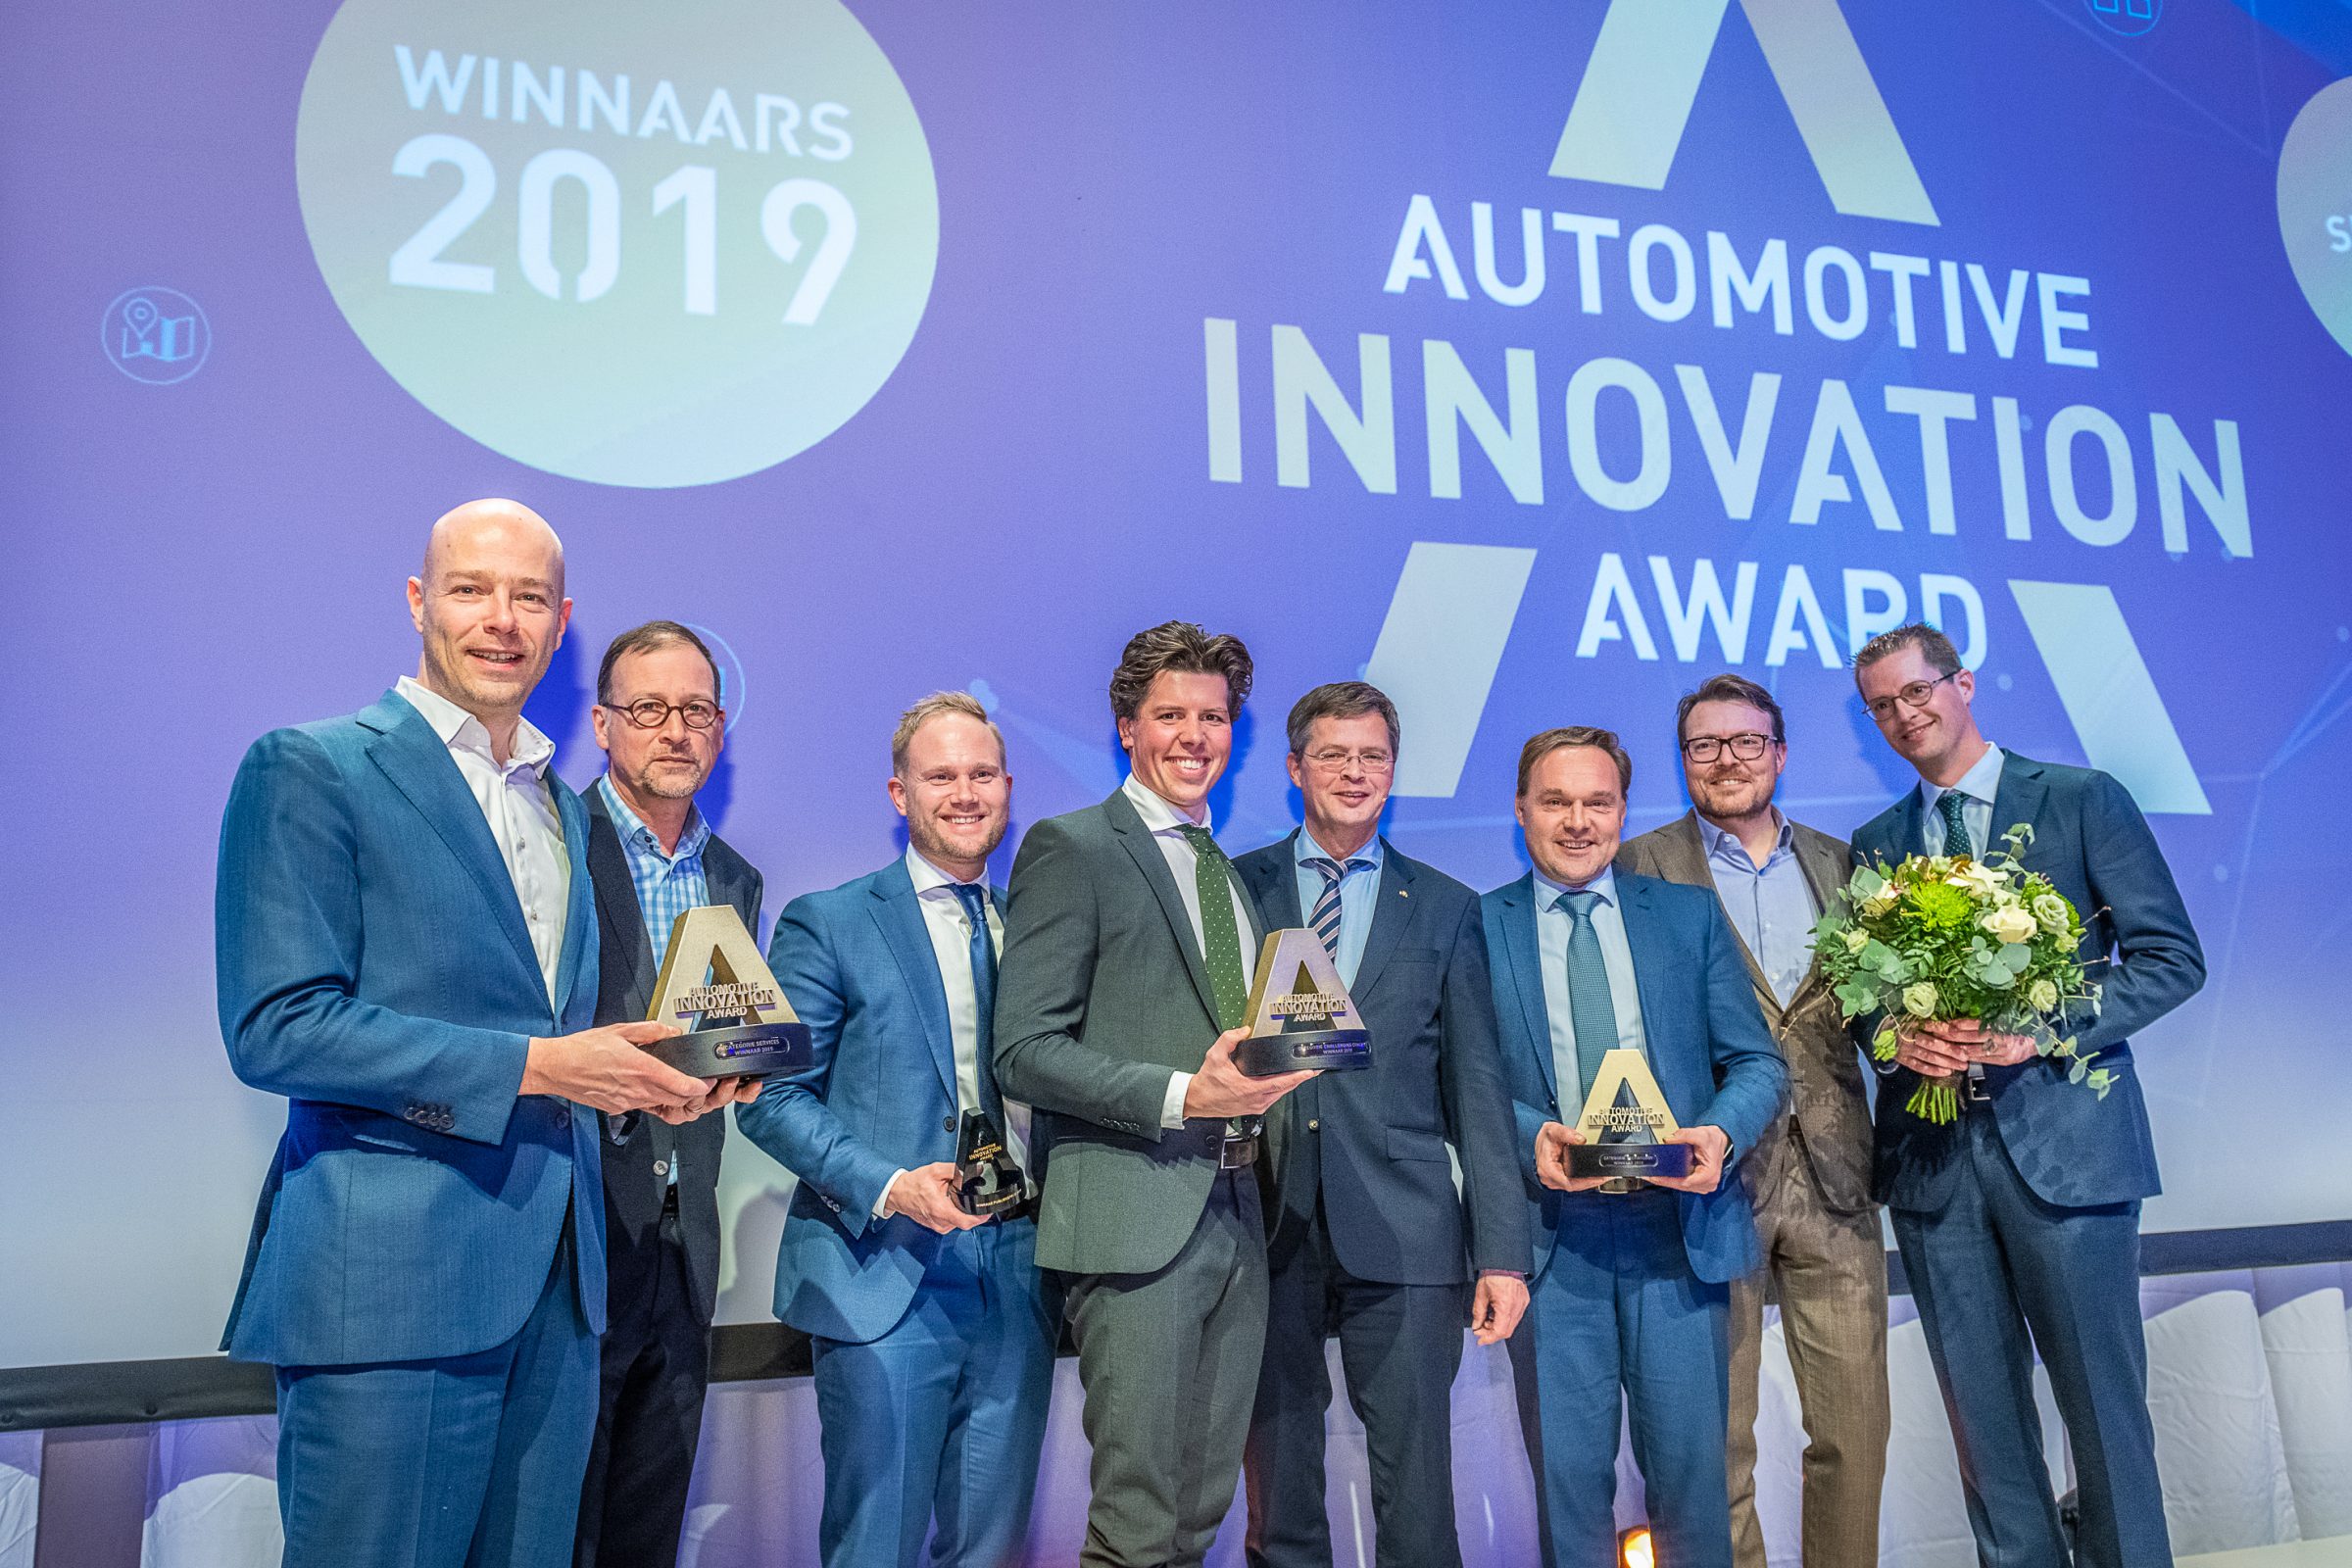 Automotive Innovation Award winners announced Automotive Innovation Award